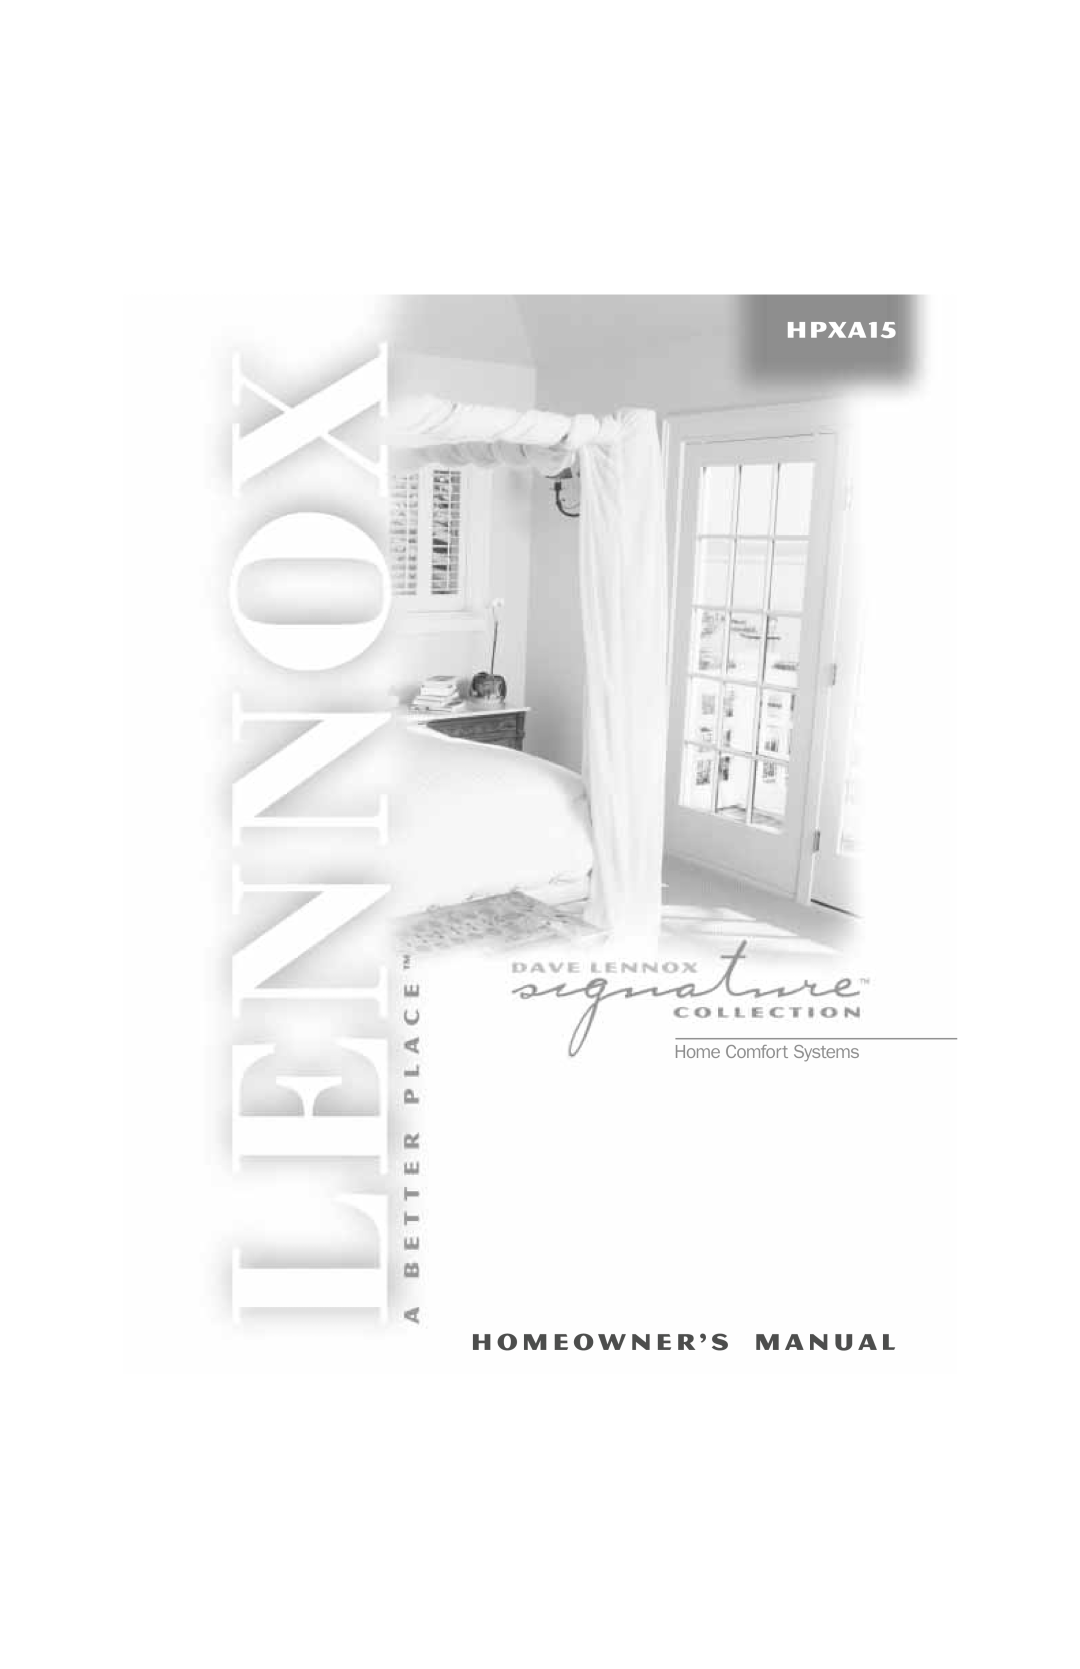 Lennox International Inc HPXa15 owner manual h o m e o w n e r ’ s m a n u1a l, Home Comfort Systems 